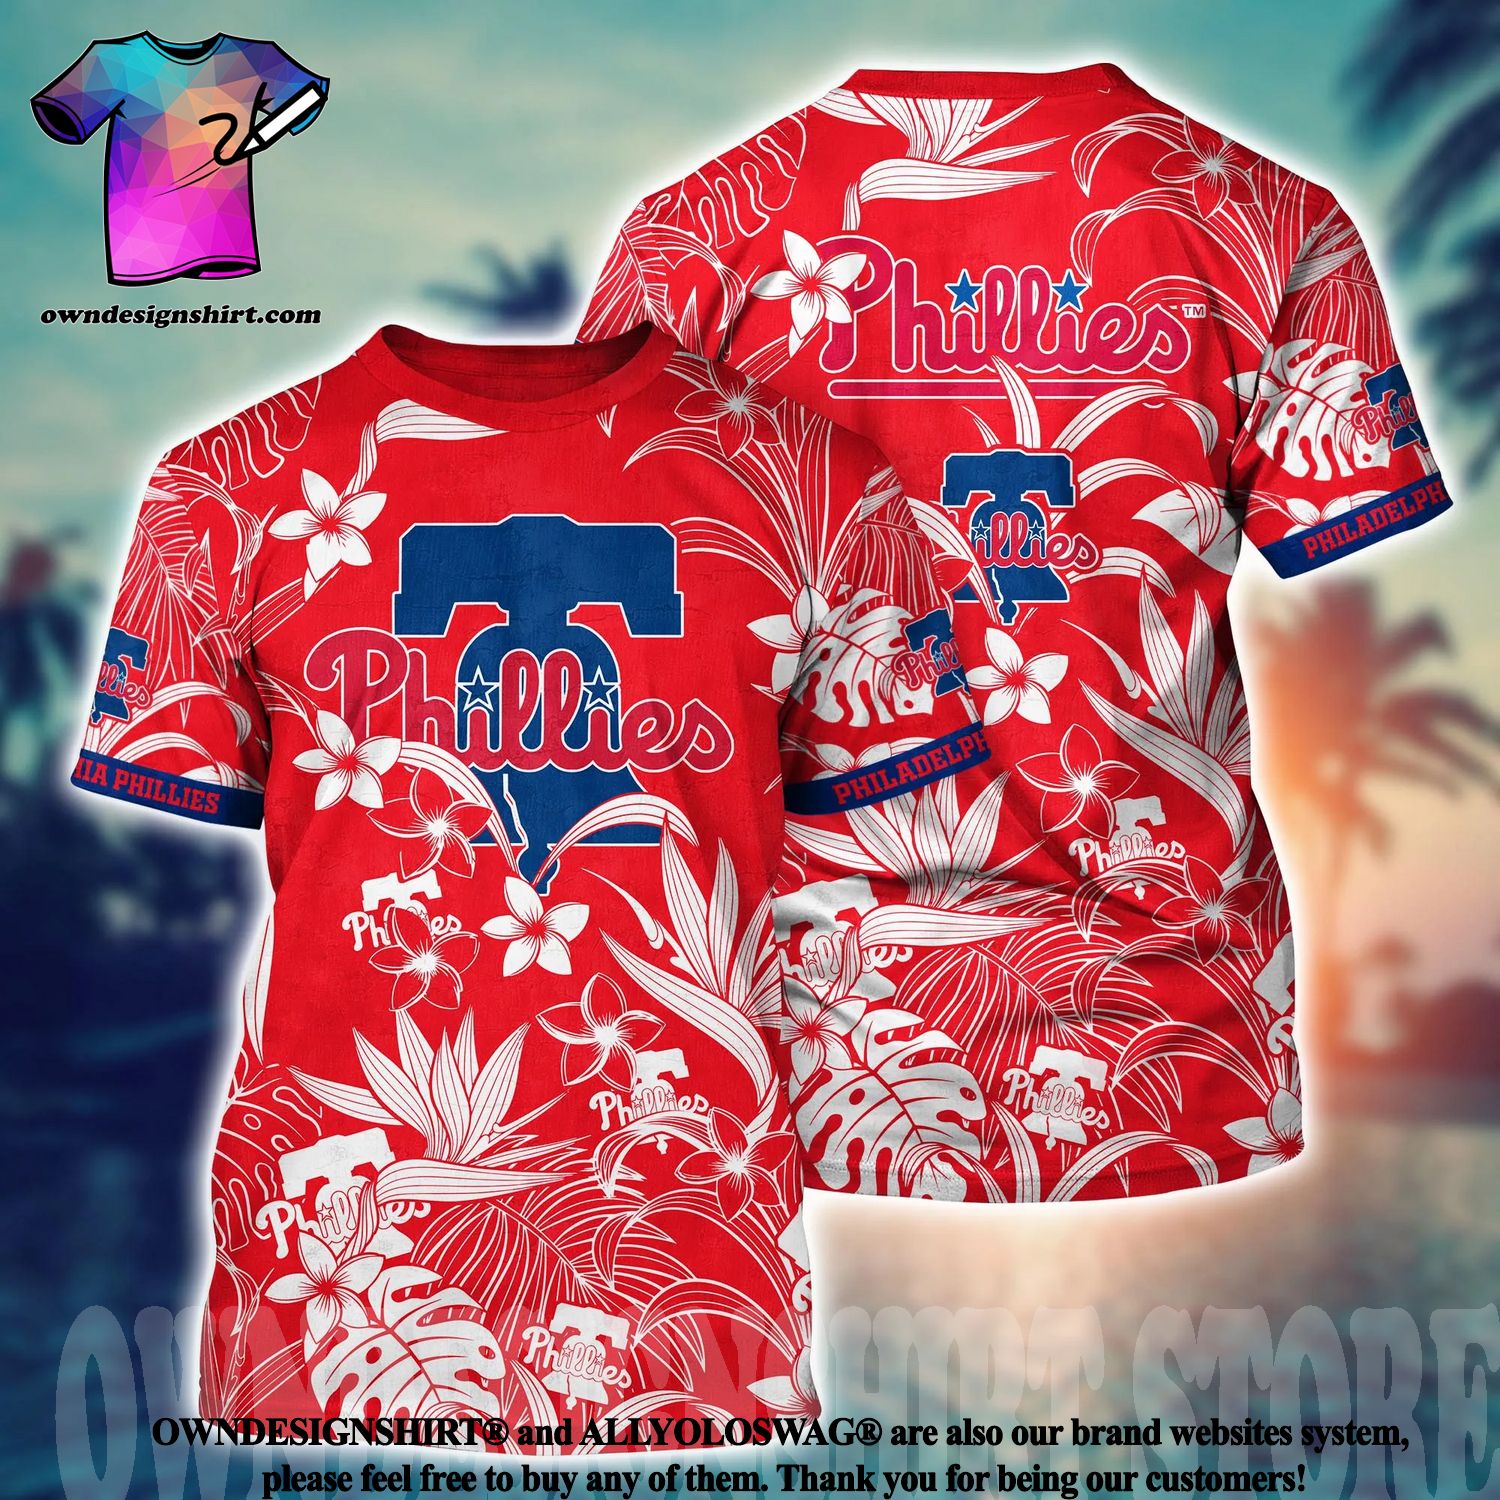 Philadelphia Phillies MLB Custom Name Habicus Palm Trees And Hawaii Symbol  Aloha Hawaiian Shirt